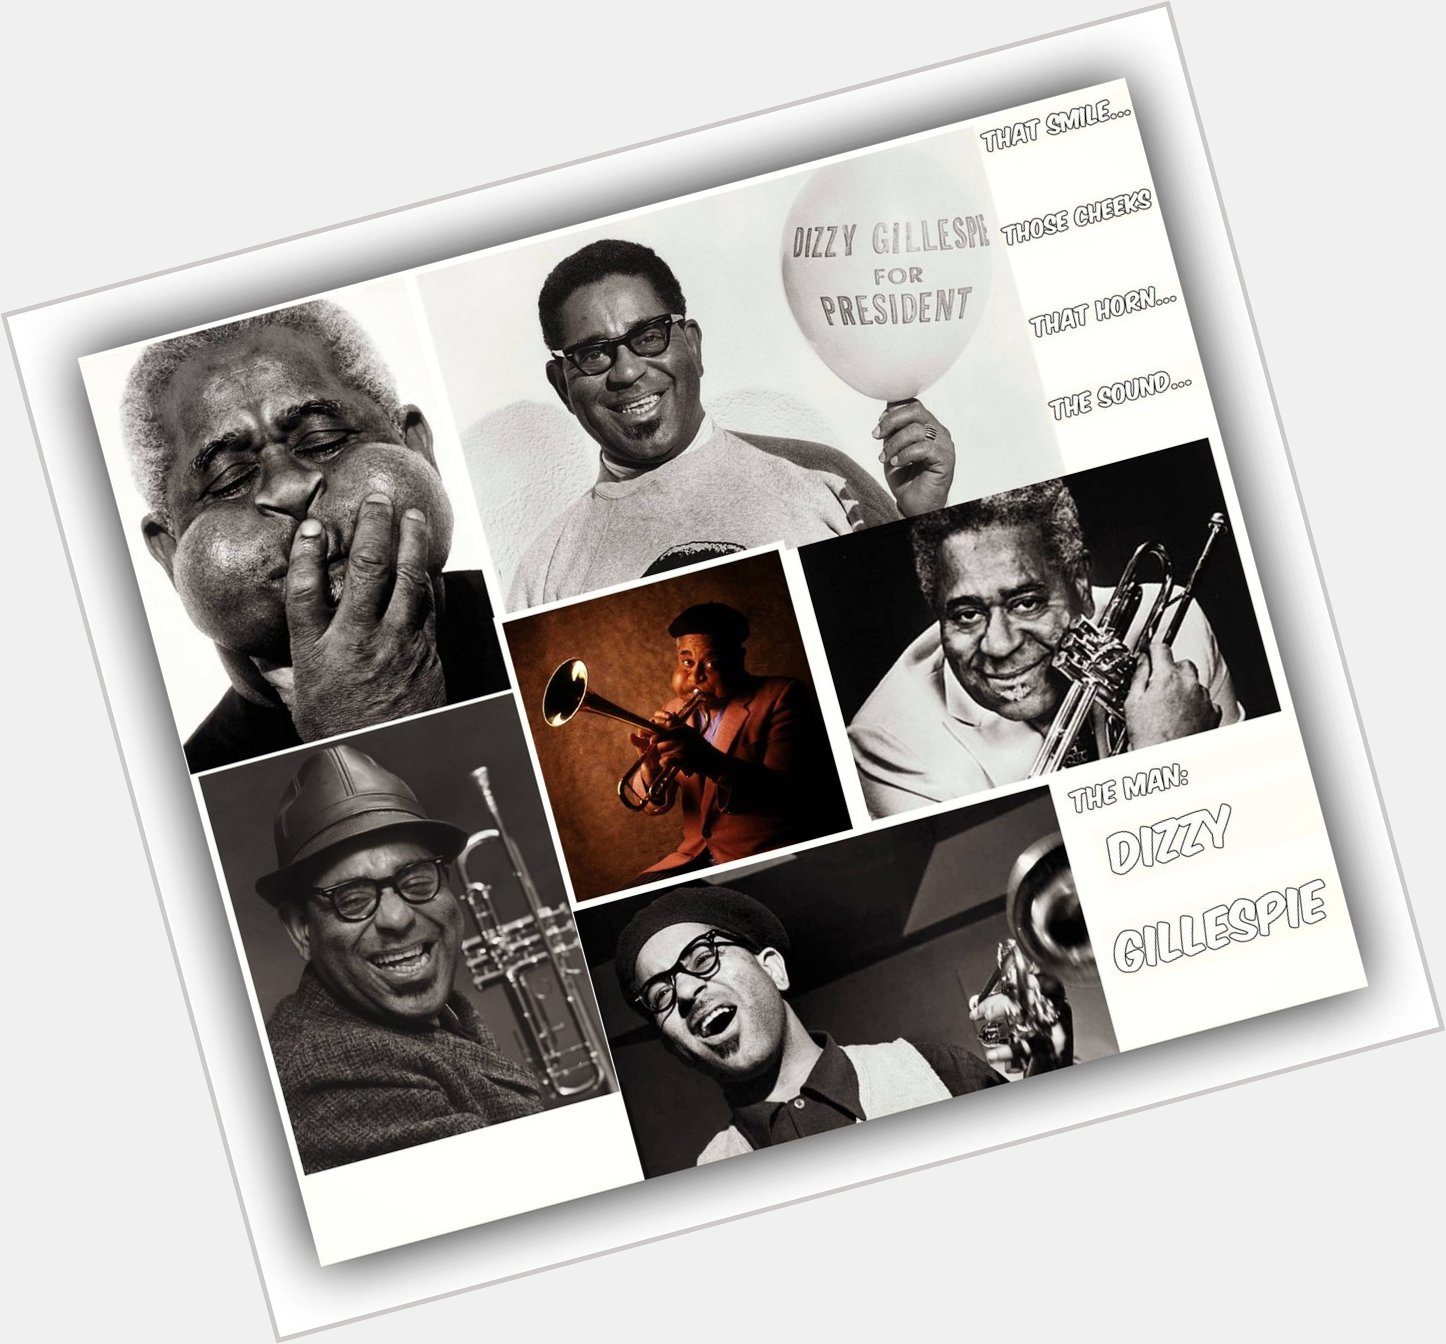 Happy Birthday to Dizzy Gillespie! December 2, WMI and 92Y present Arturo Sandoval\s special tribute concert to him 